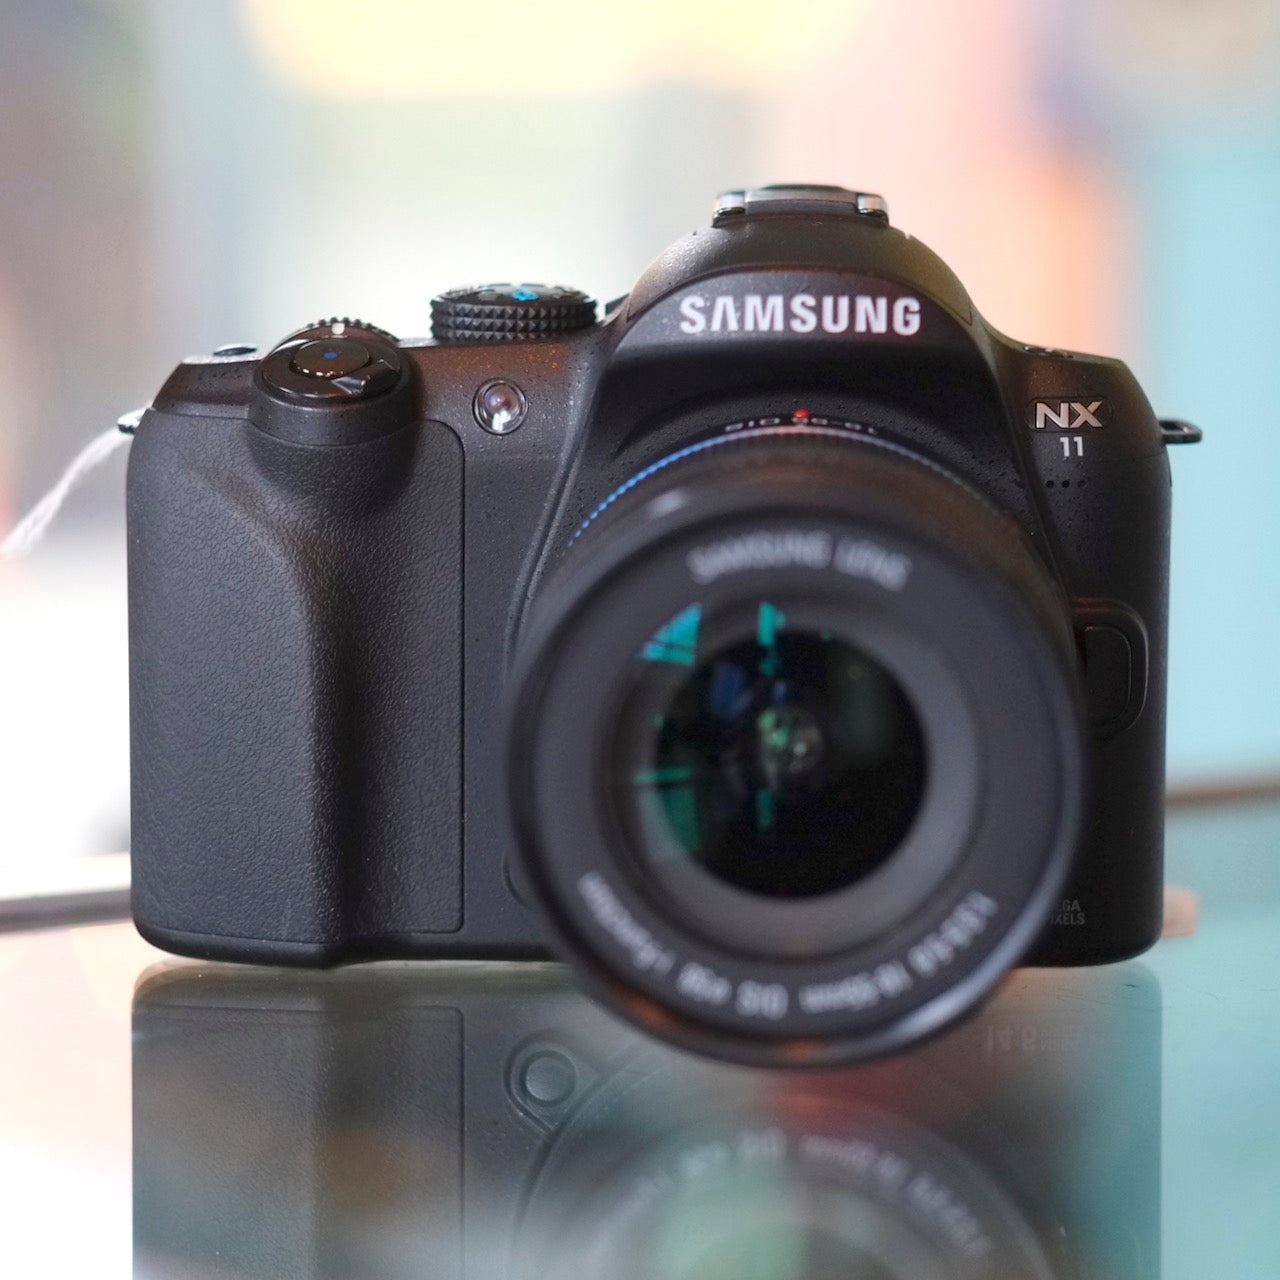 Samsung NX11 with 18-55mm OIS lens